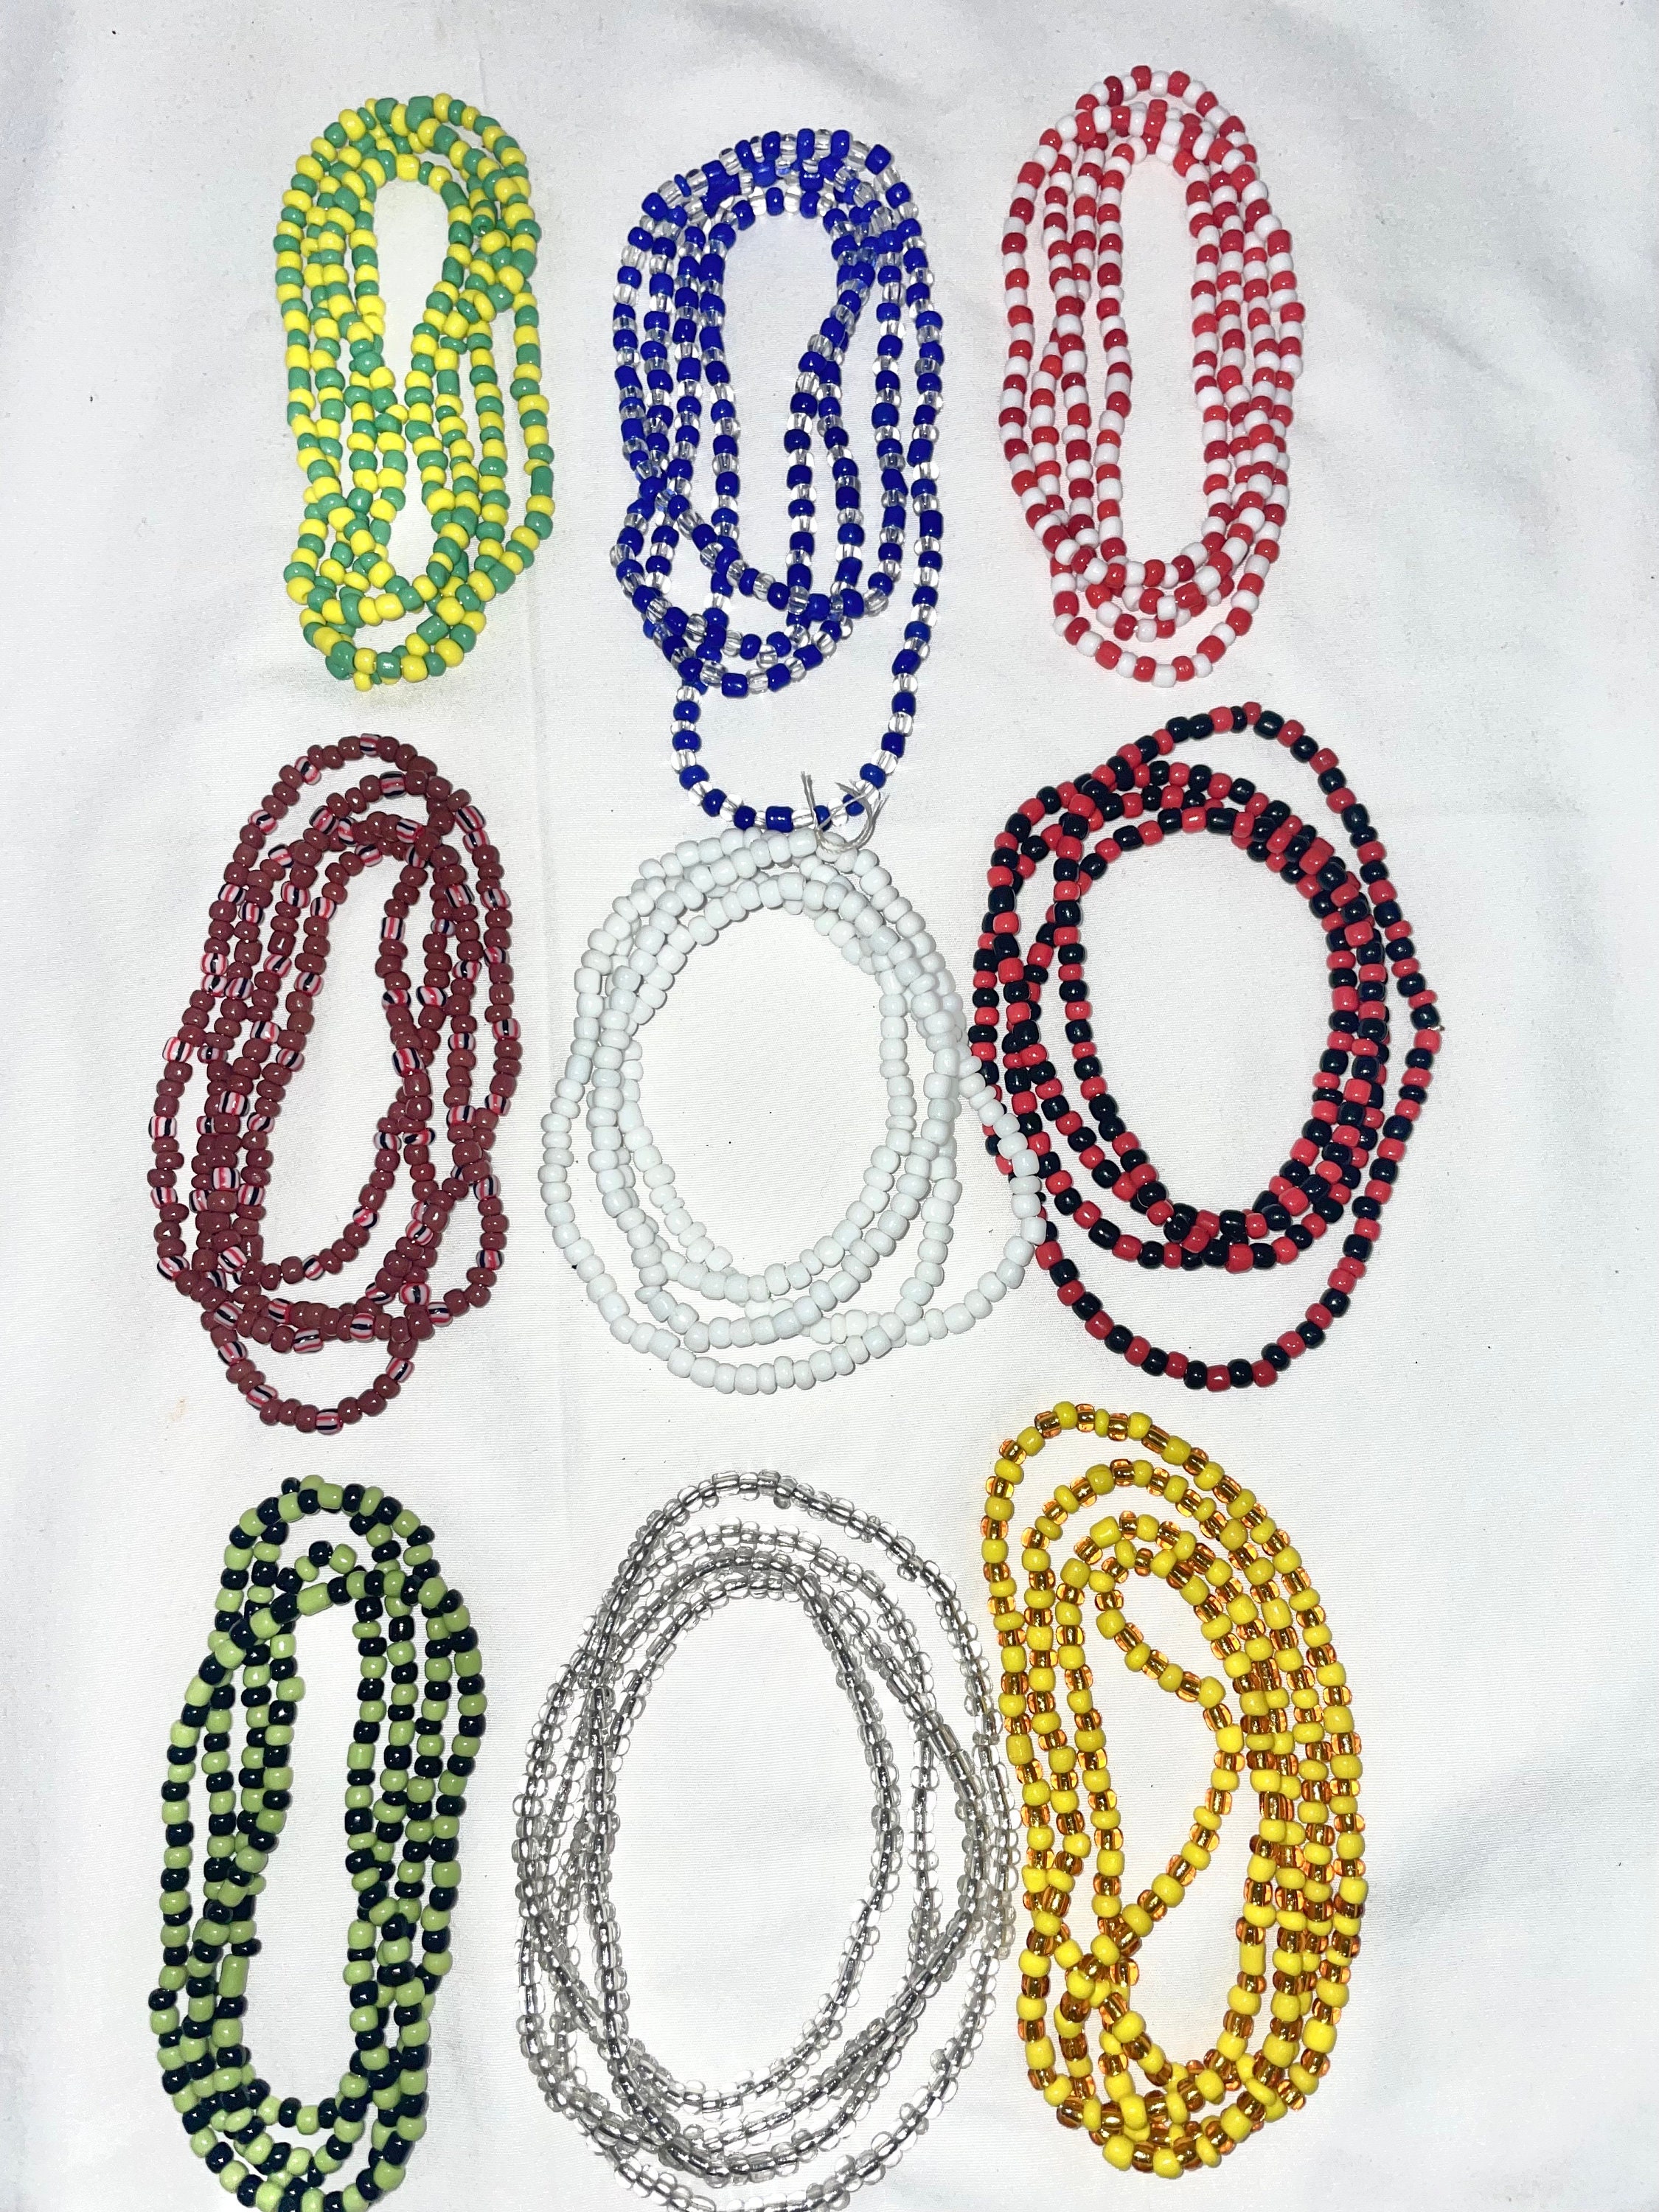 6 Collares De Santeria, Eleggua, Obbatala, Shango, Yemaya, Oshun Y Orula,  Ifa, Religion Yoruba, Afro-cubana